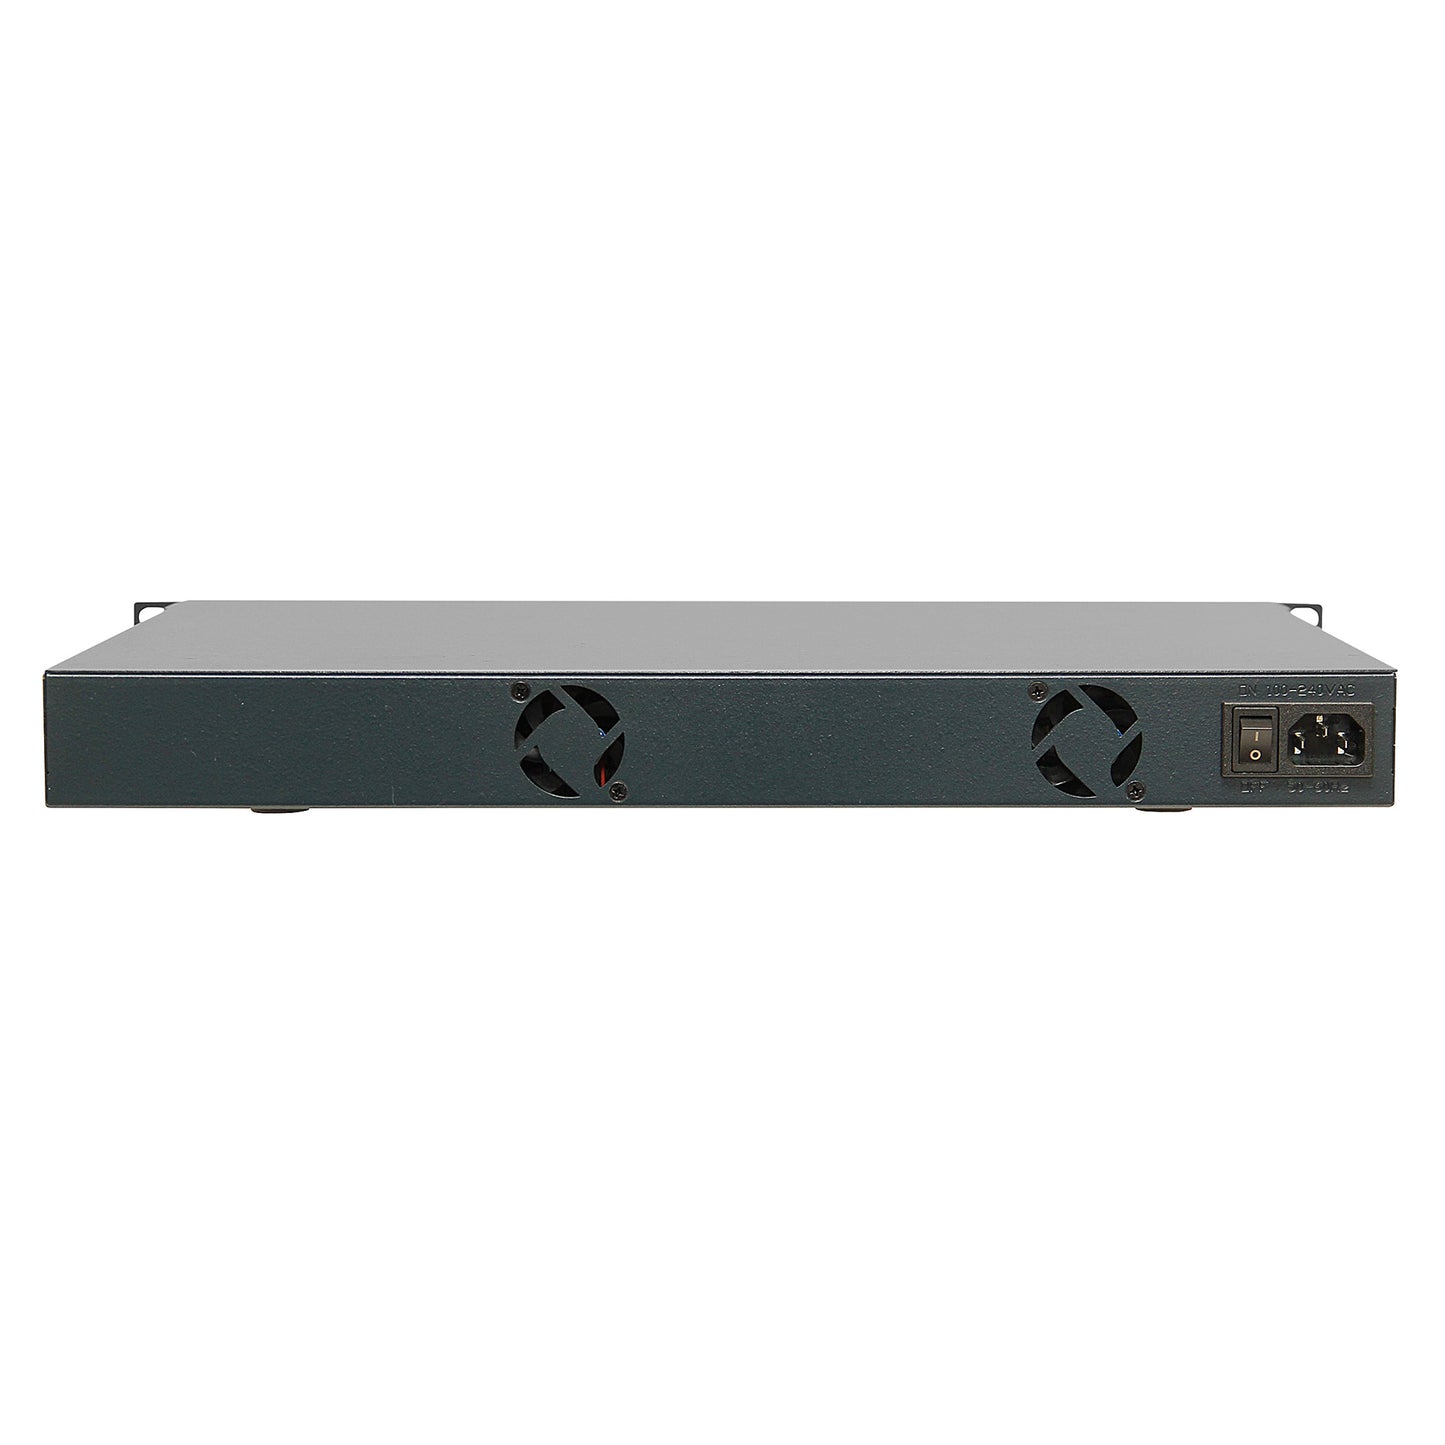 EX17162 - Web-Smart Ethernet Switch (16-port 10/100BASE-TX PoE IEEE 802.3at + 2-Port Combo Gigabit SFP)